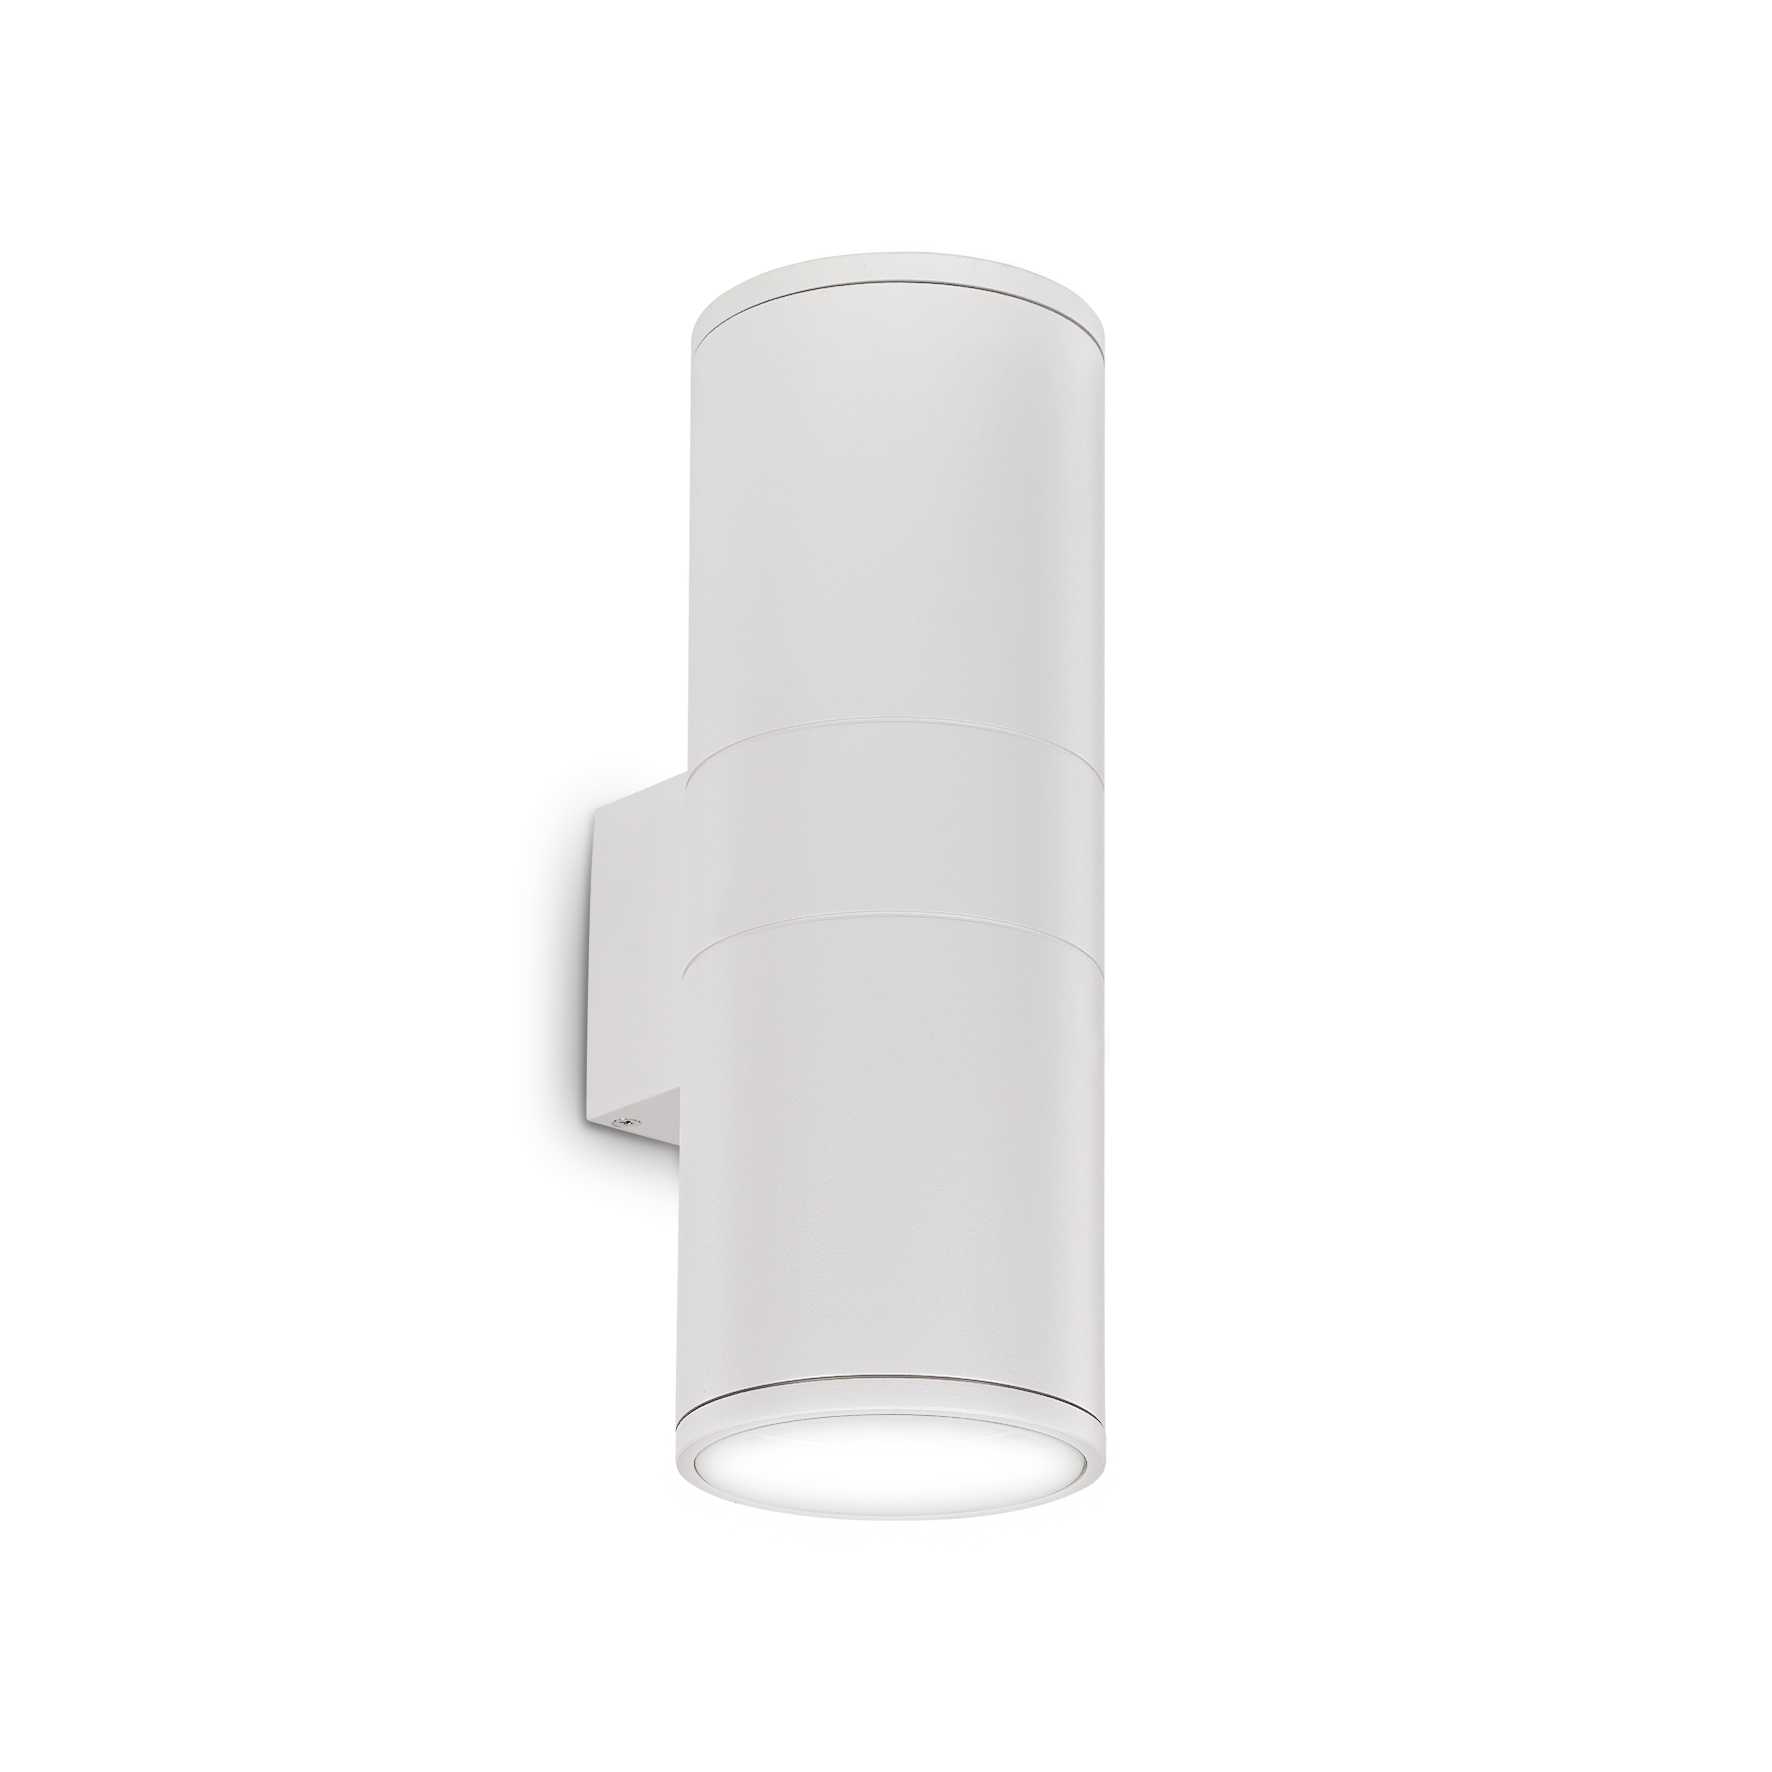 AD hotelska oprema Vanjska zidna lampa Gun ap2 velika- Bijele boje slika proizvoda